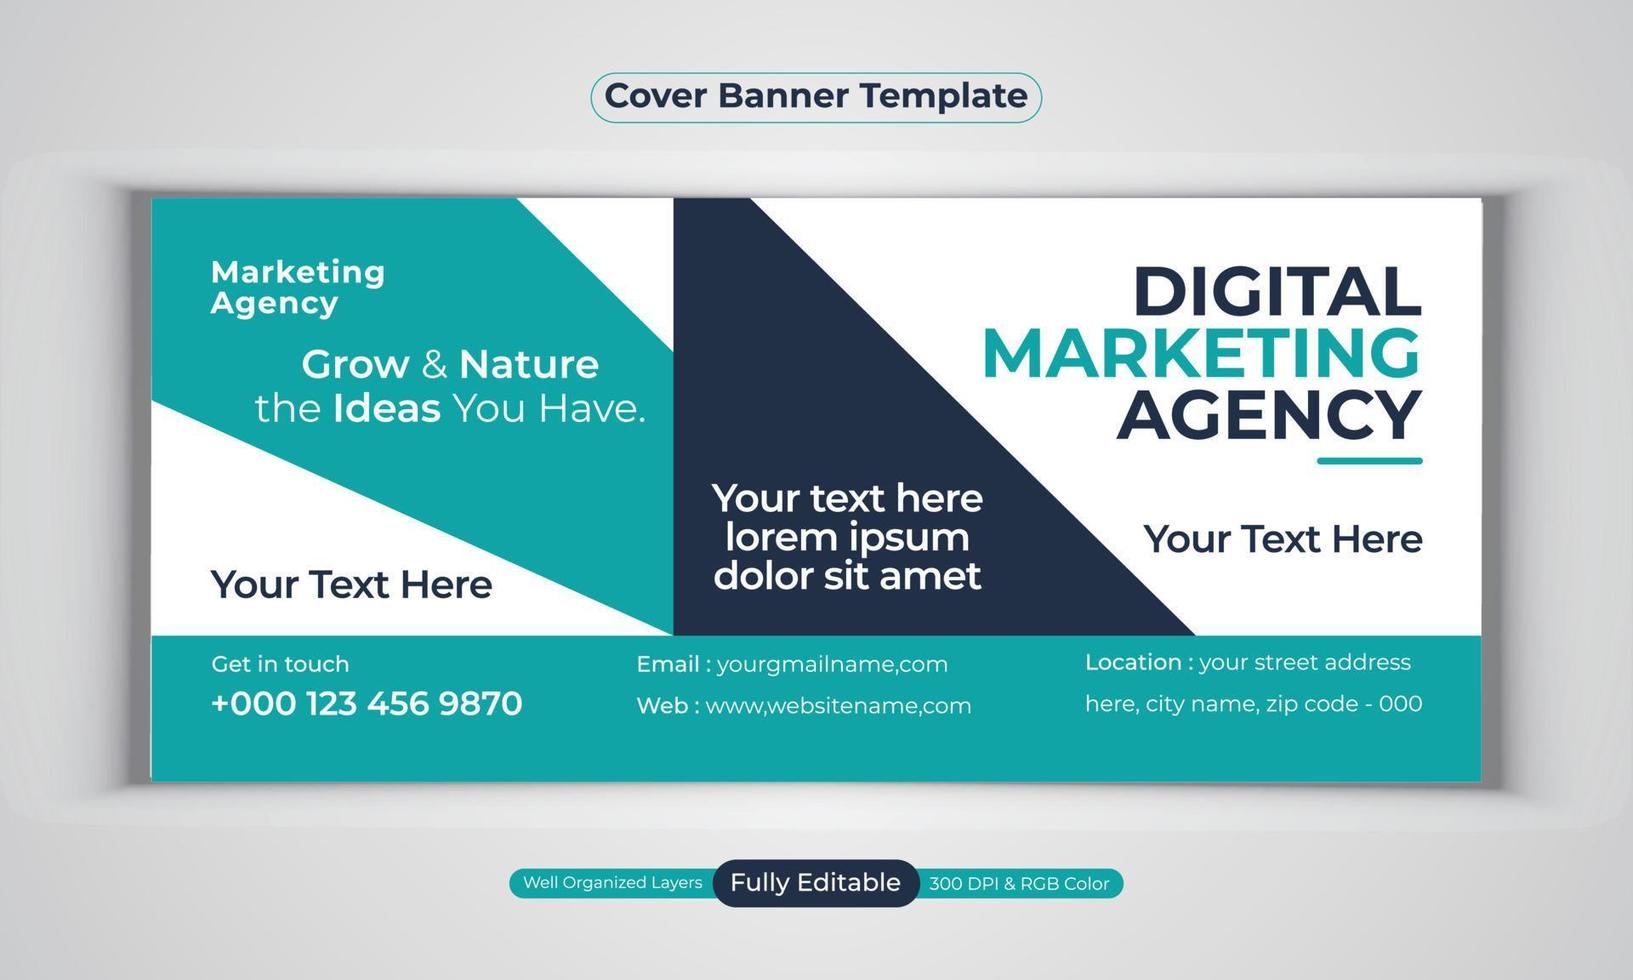 digitale Marketingagentur Business Banner Design moderne Layout-Vektorvorlage vektor